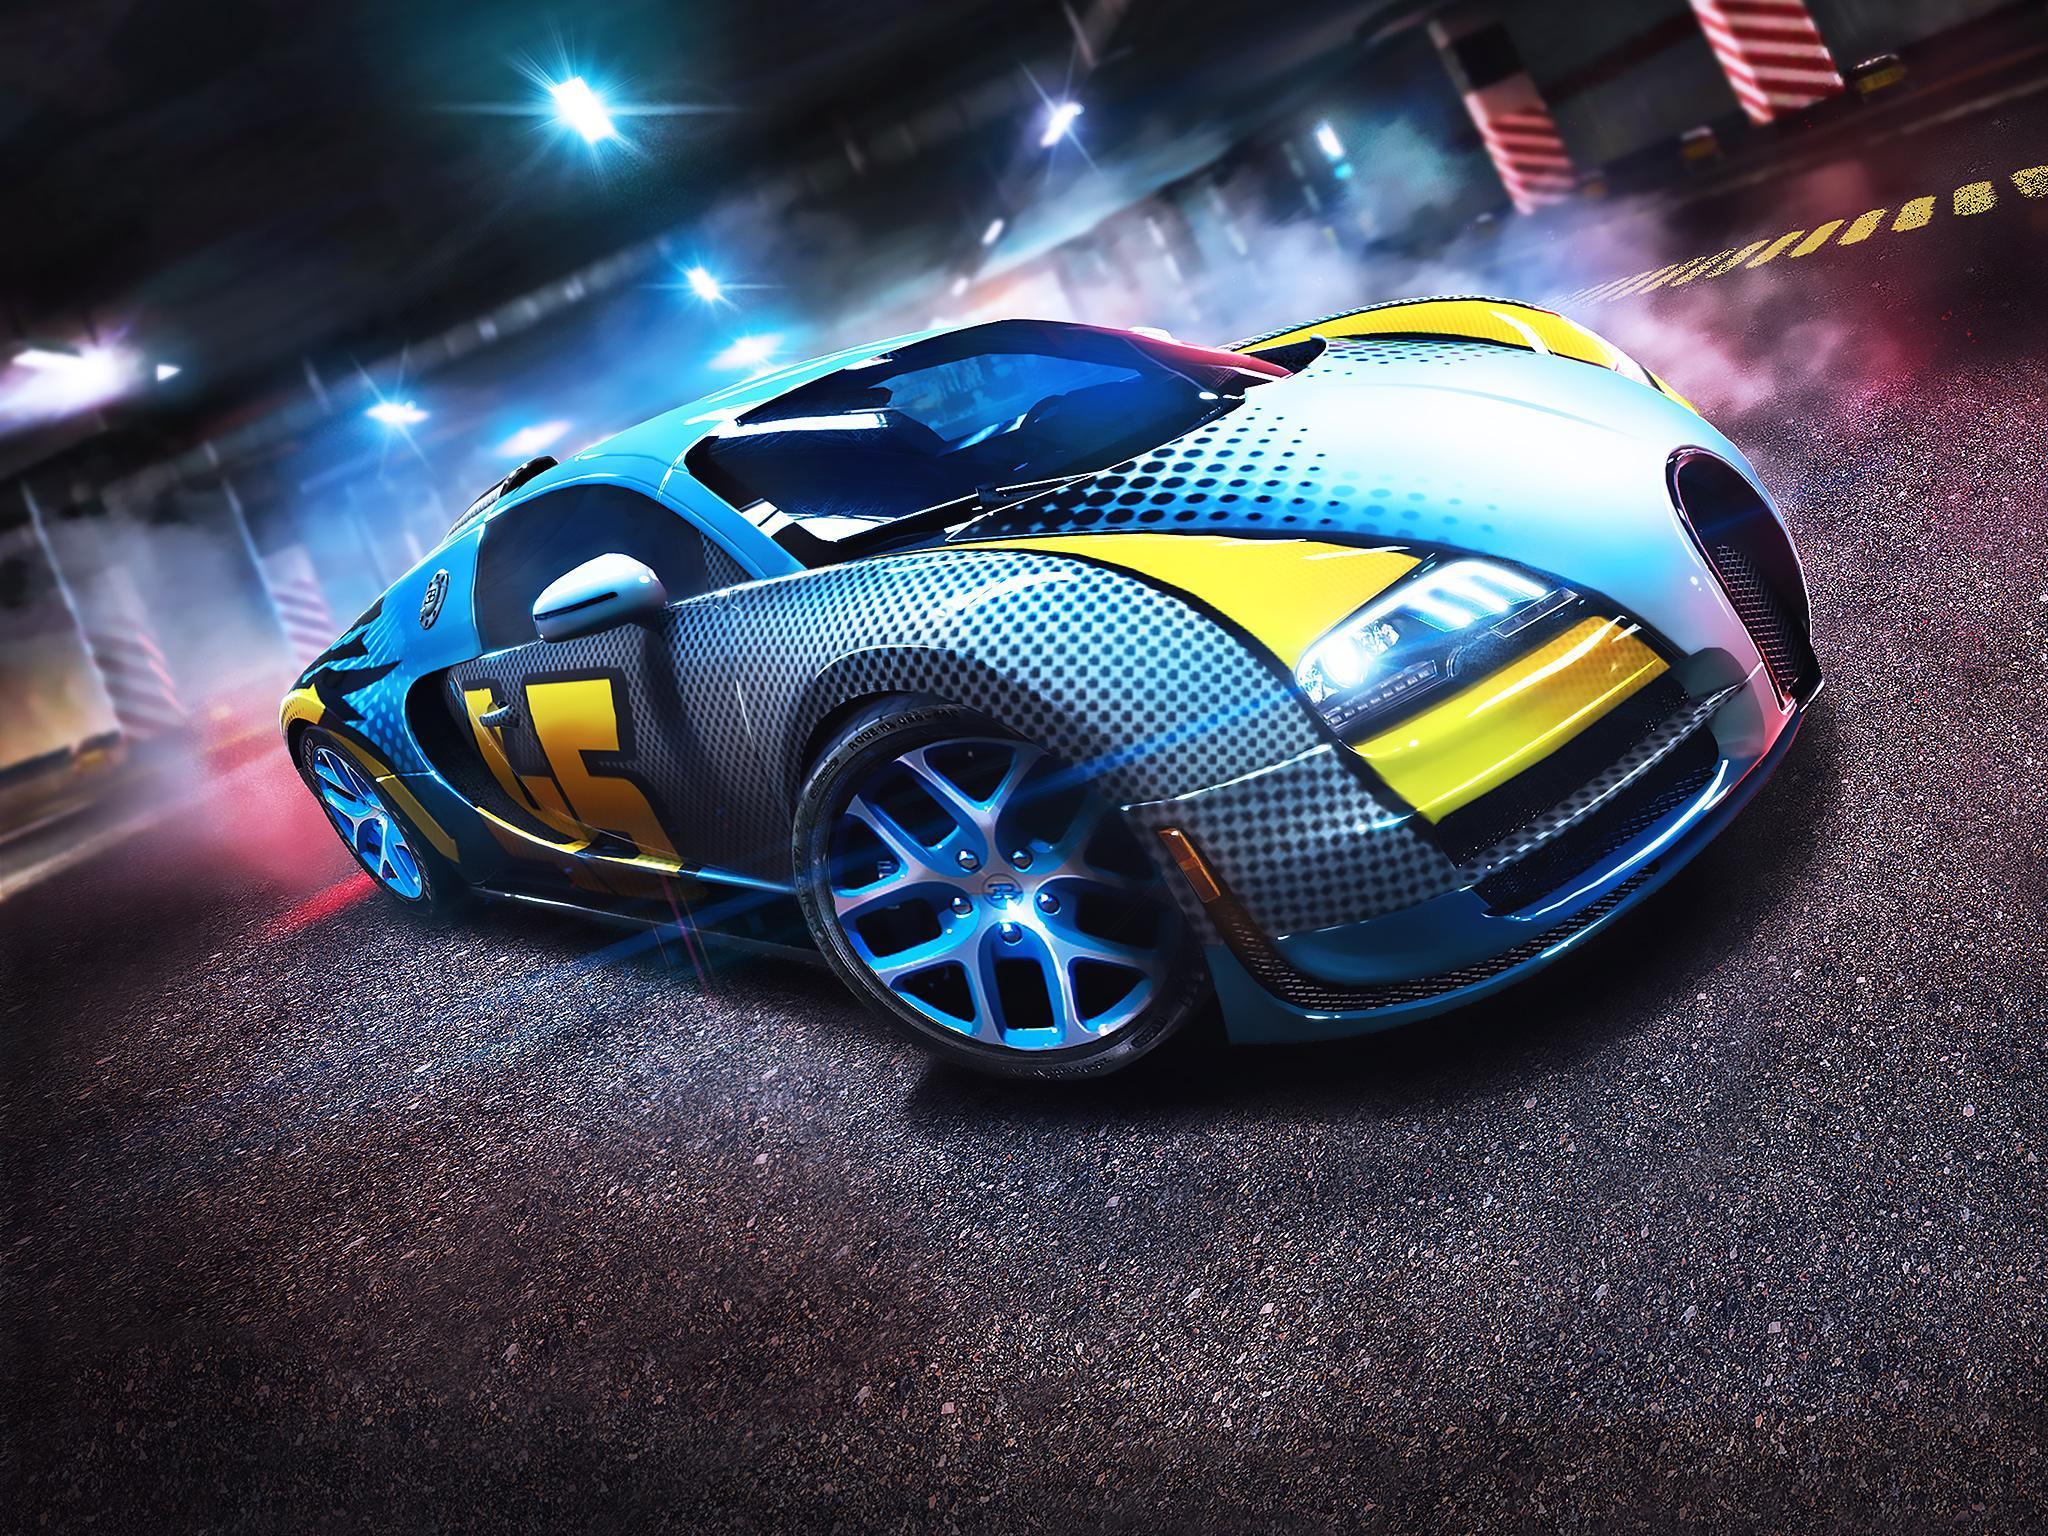 Asphalt 8 Airborne - Fun Real Car Racing Game 5.4.0o Screenshot 11